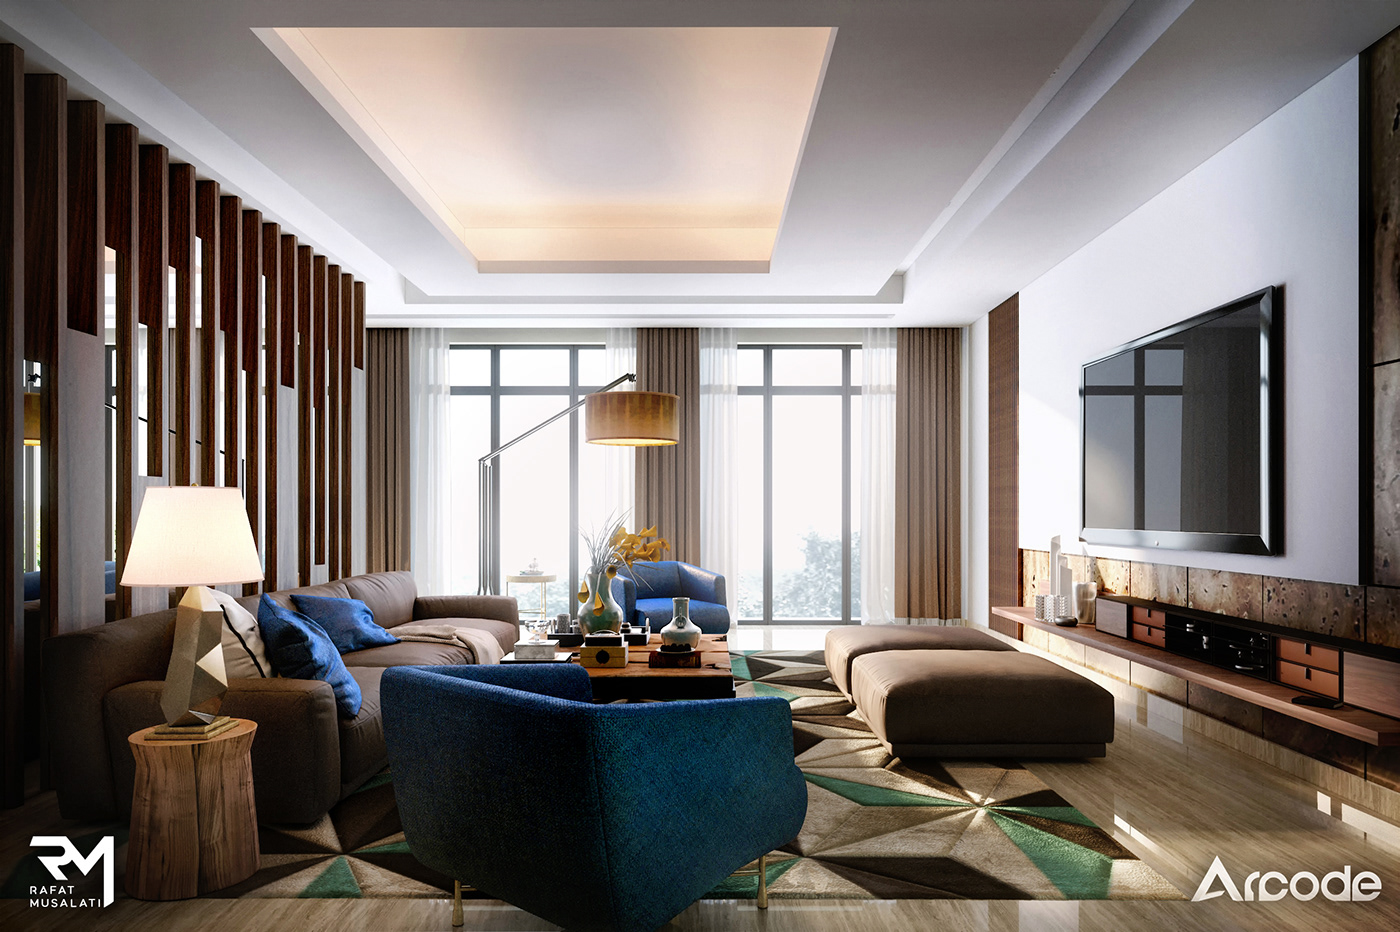 dubai UAE 3dsmax coronarenderer corona interiordesign Interior architecture modern design